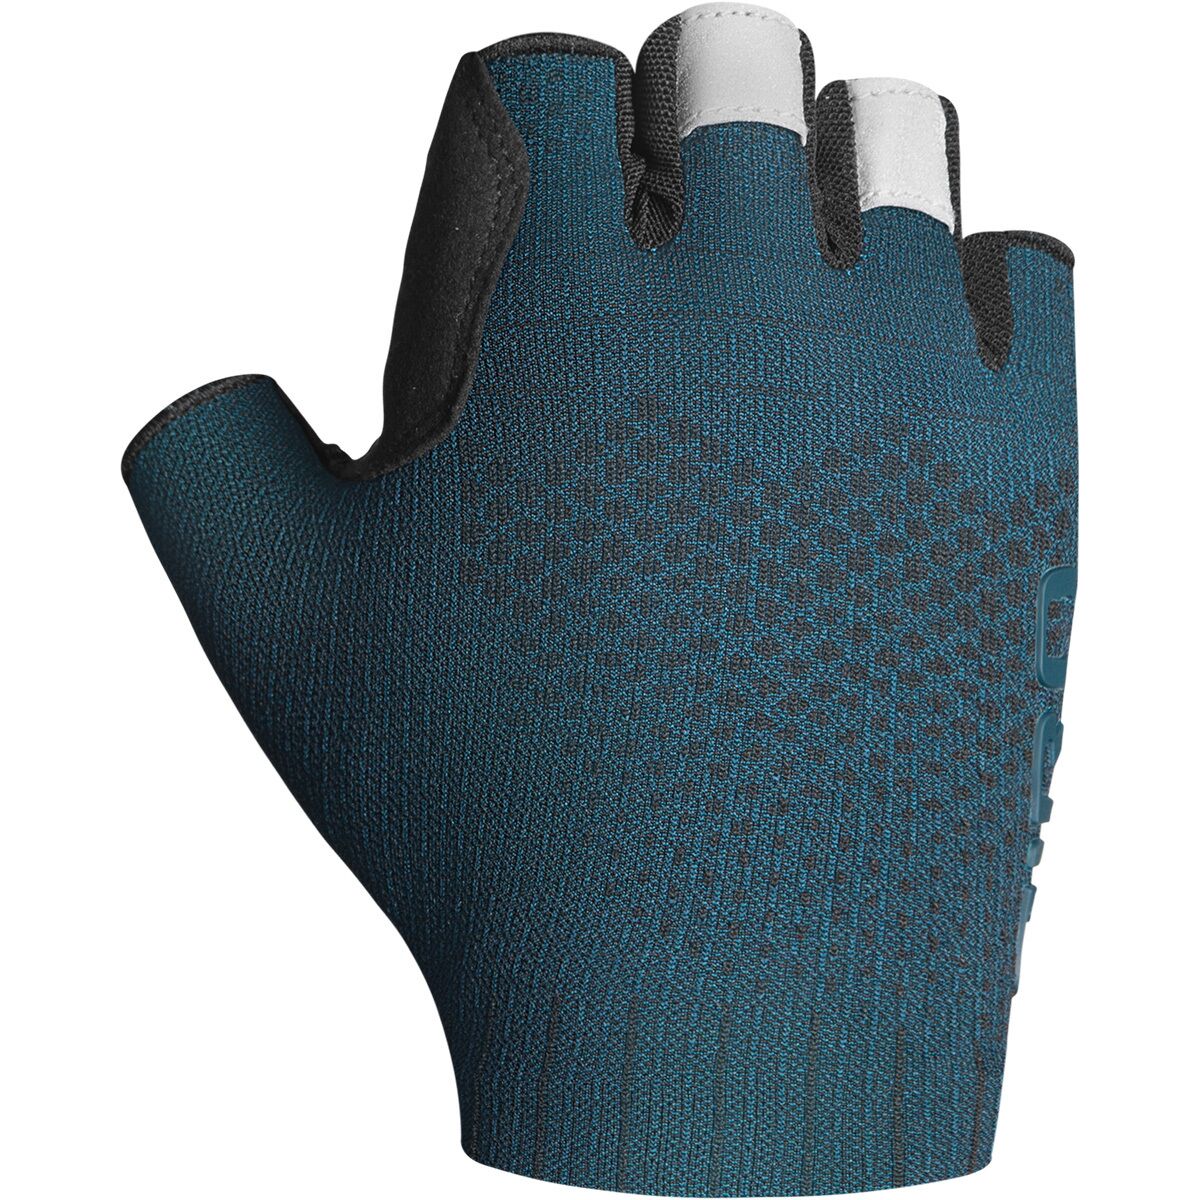 Giro Xnetic Road Glove - Women's Harbor Blue, M